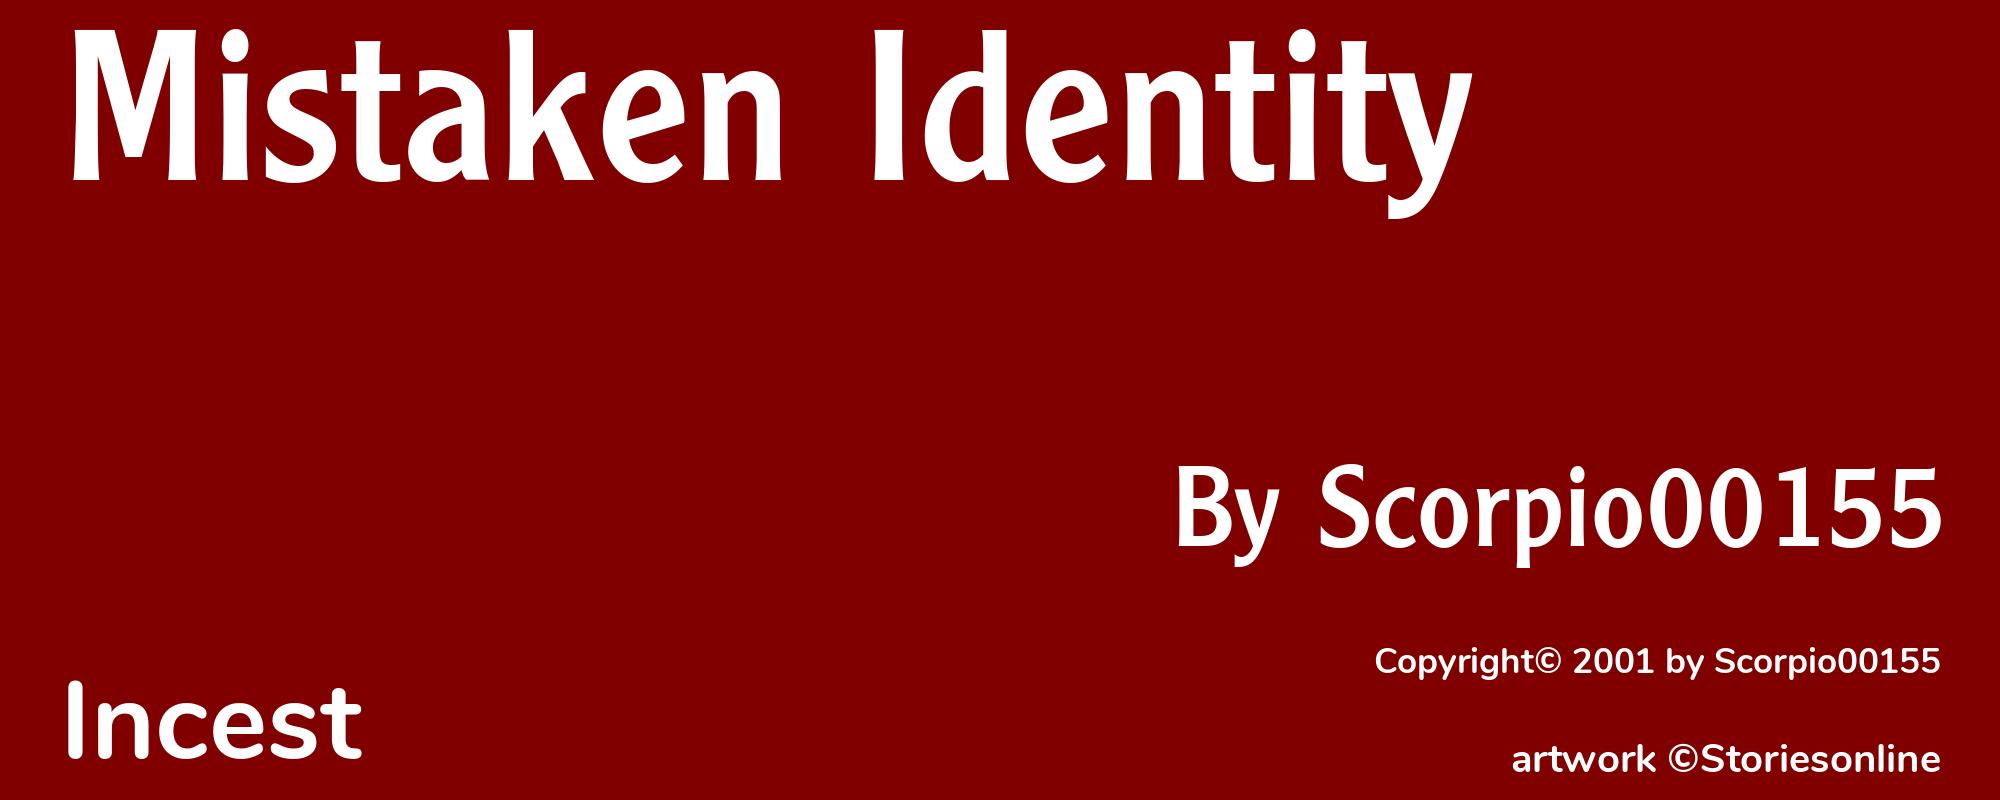 Mistaken Identity - Cover